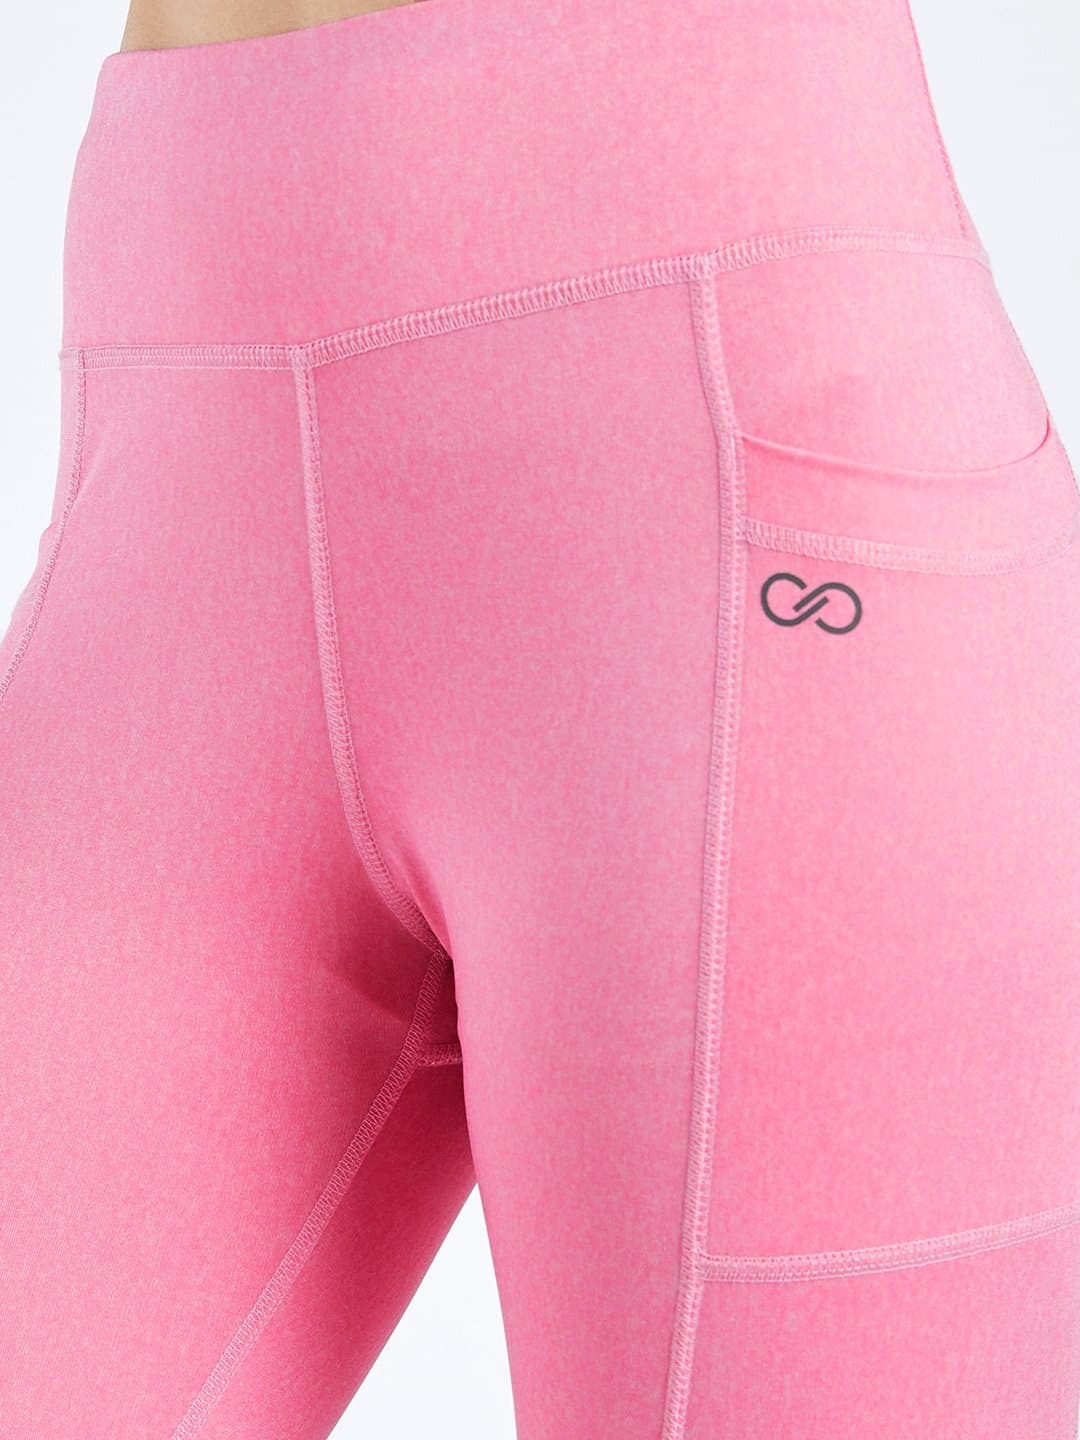 Maxtreme Power Me Pink Marl Pocket Capri Leggings